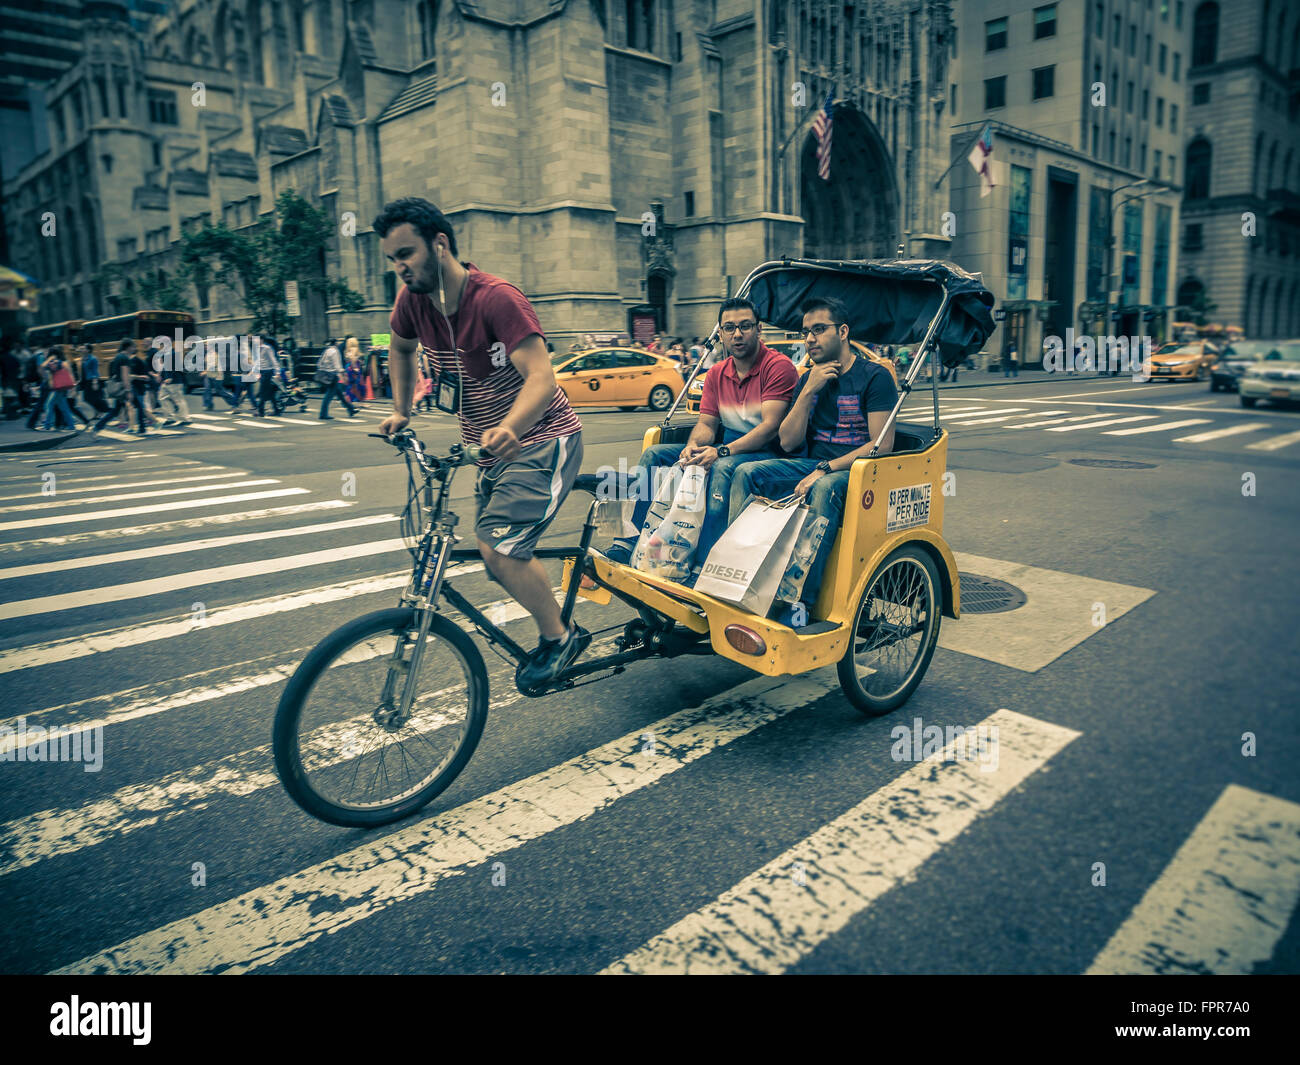 Bicycle Rickshaw with passengers on 5th Avenue, New York, USA. Stock Photo